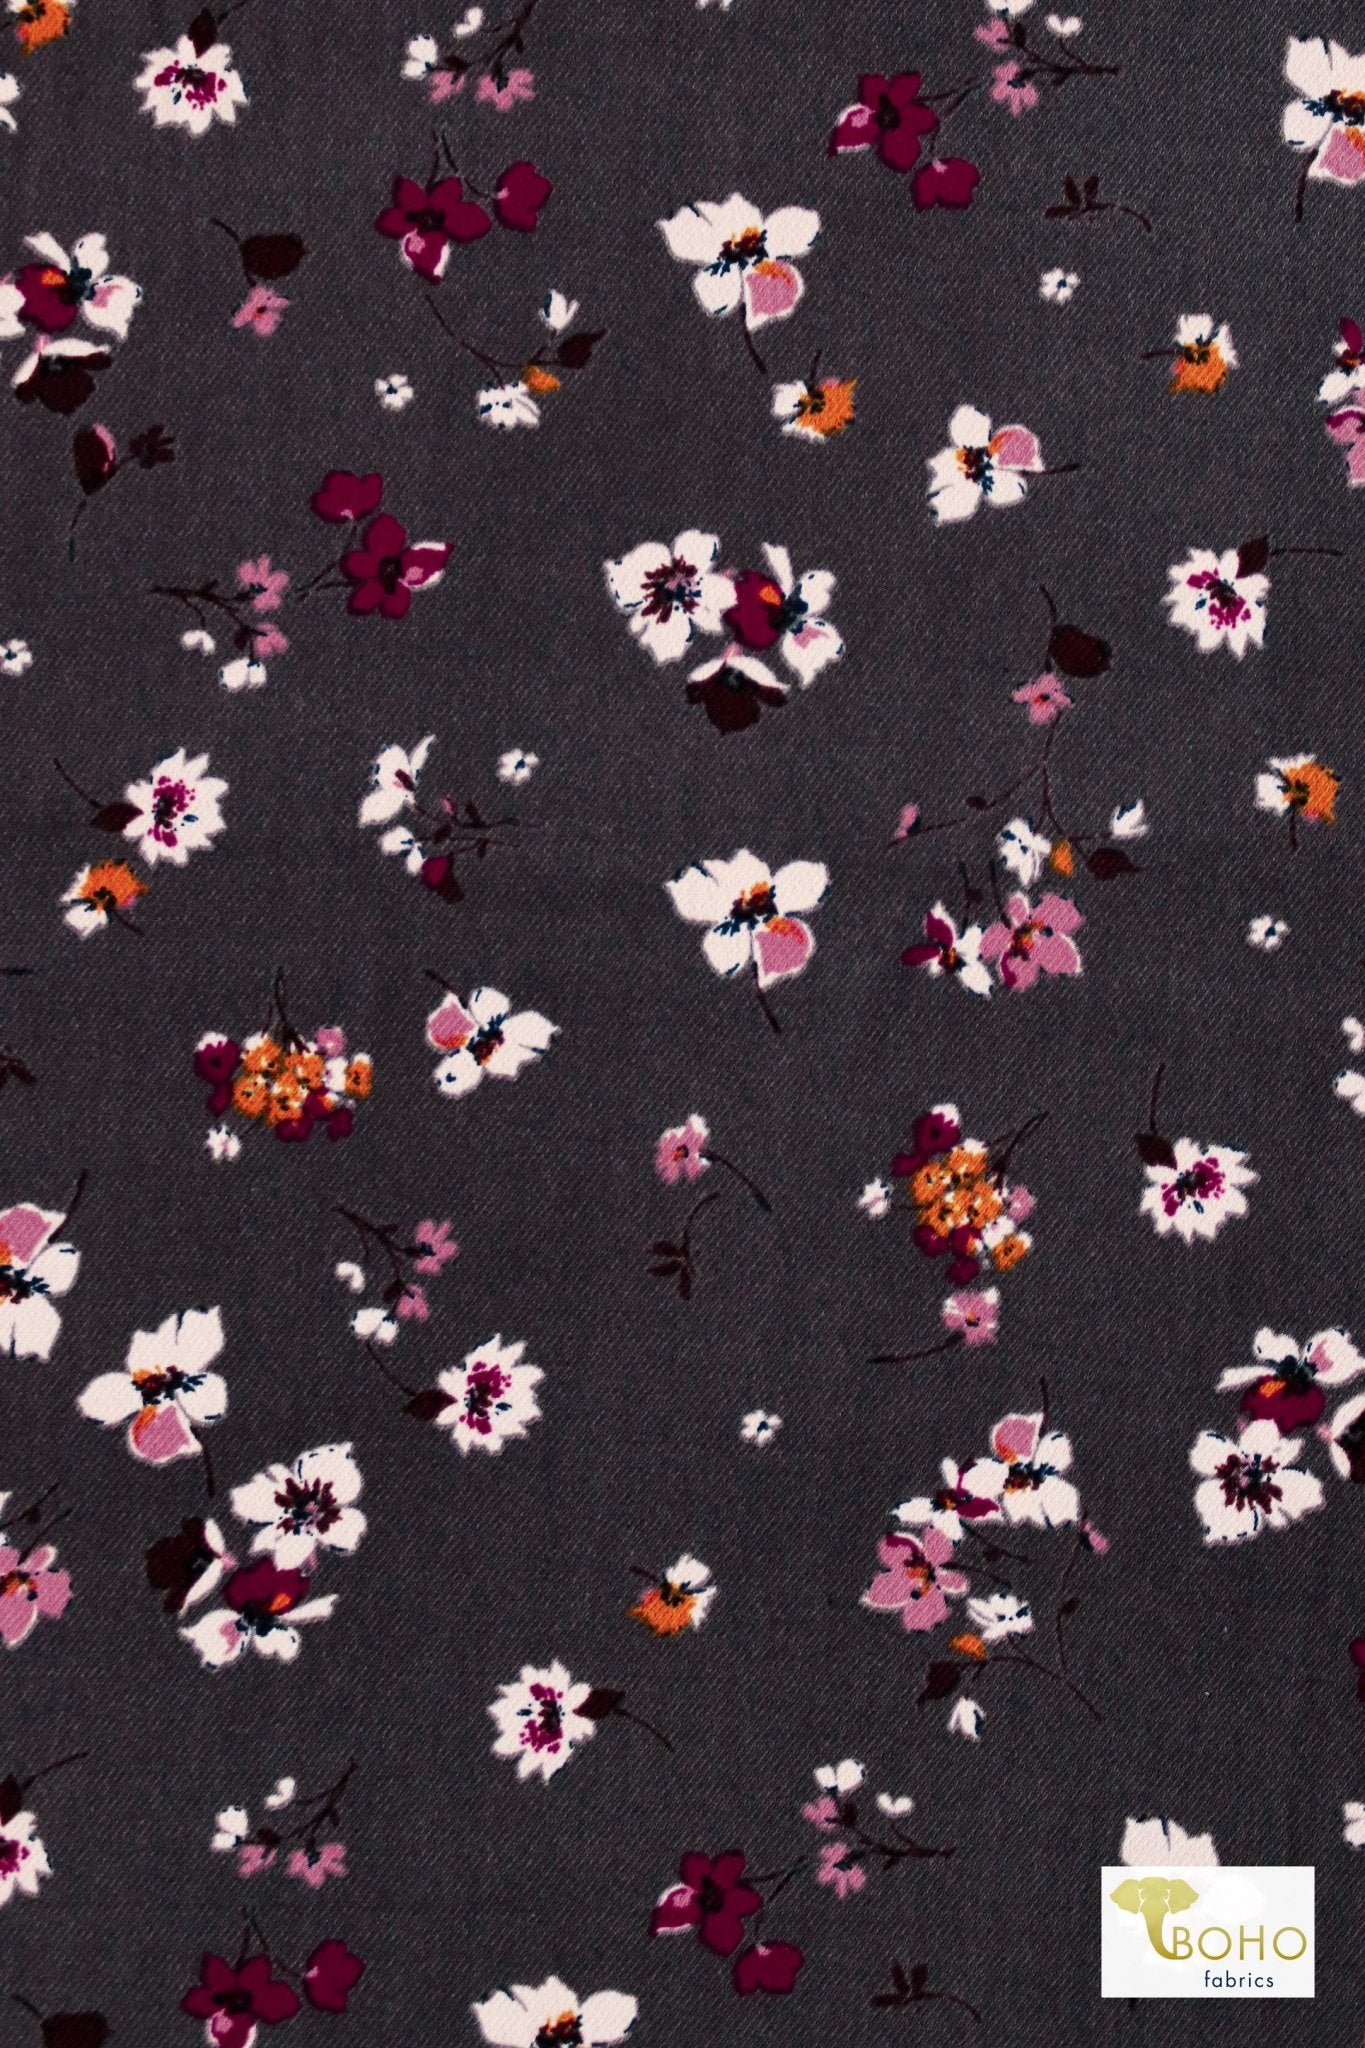 Florals on Gray, Twill Woven - Boho Fabrics